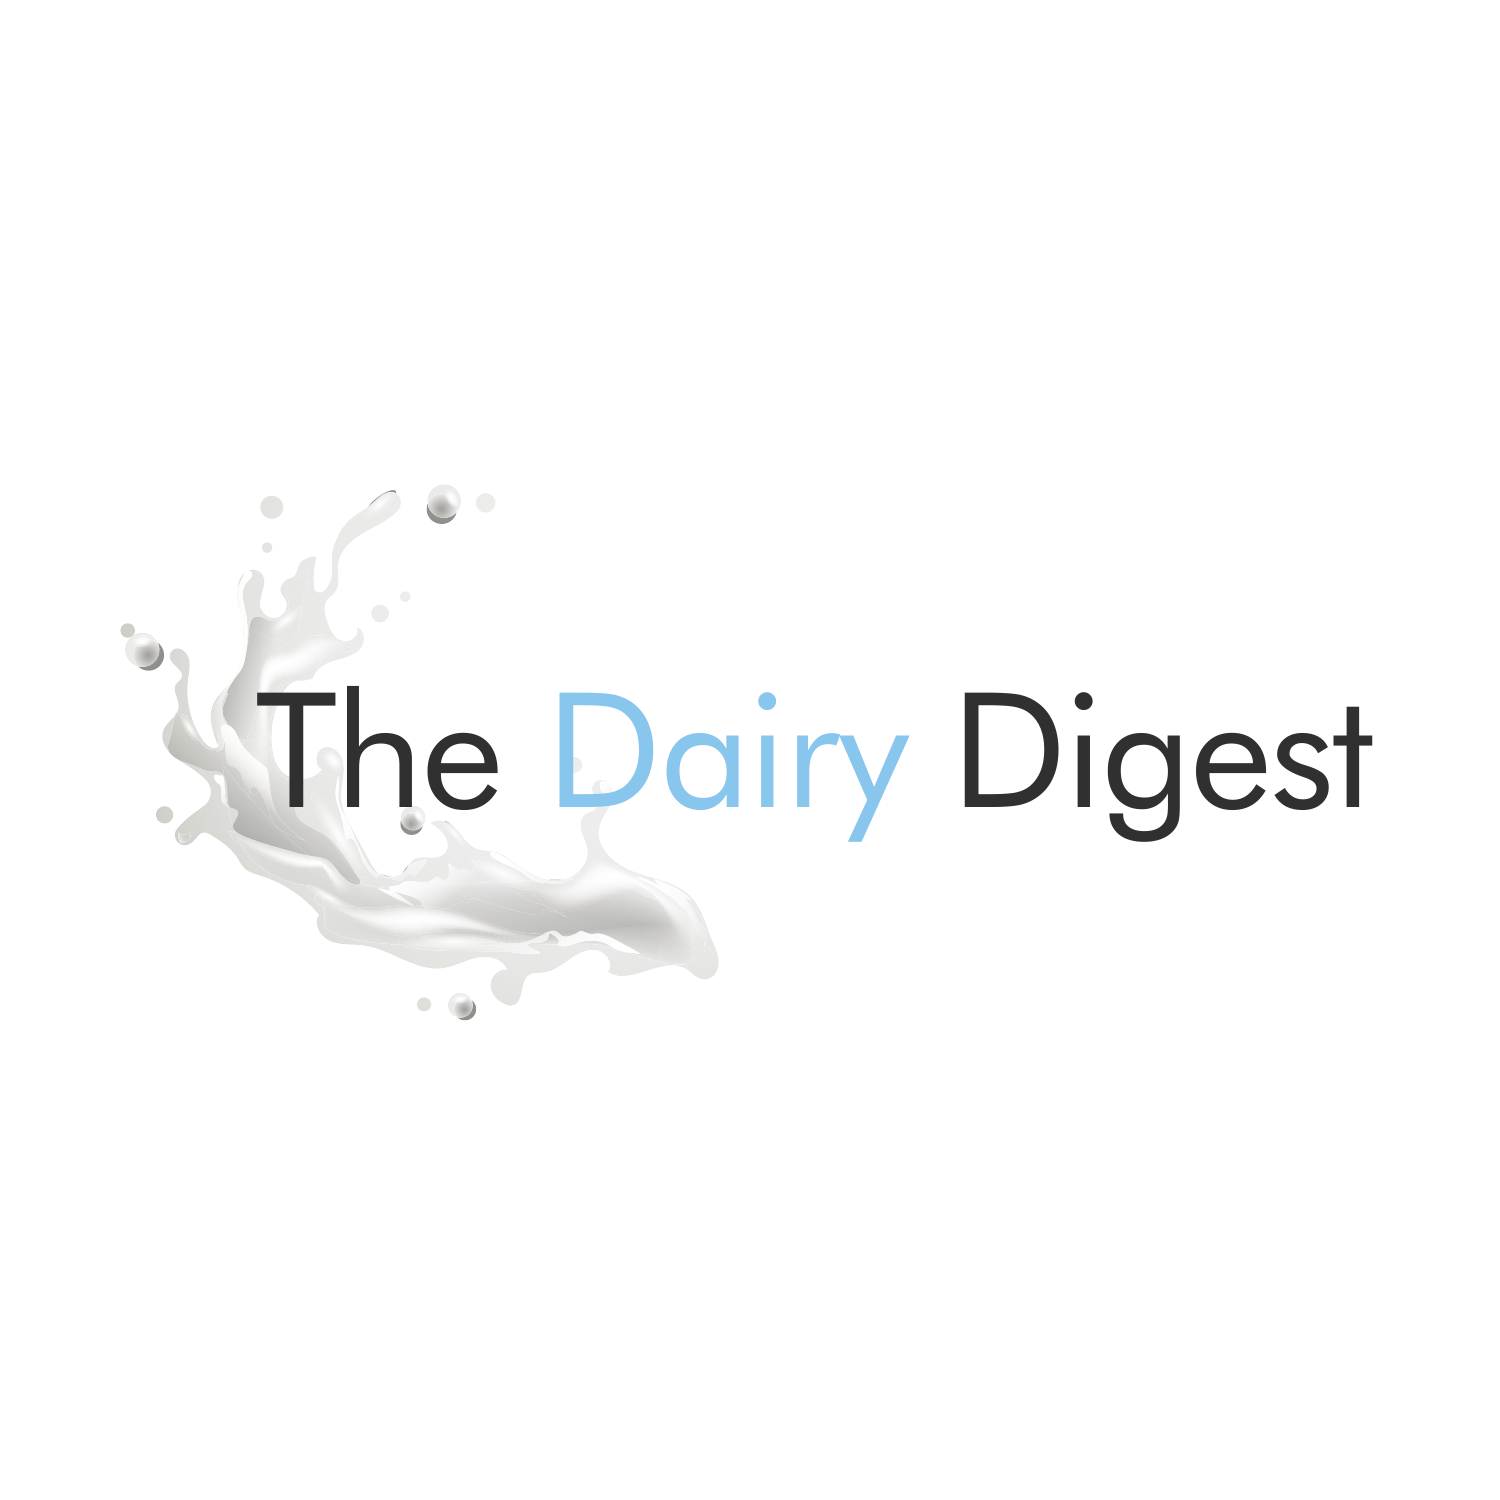 The <b>Dairy </b> Digest